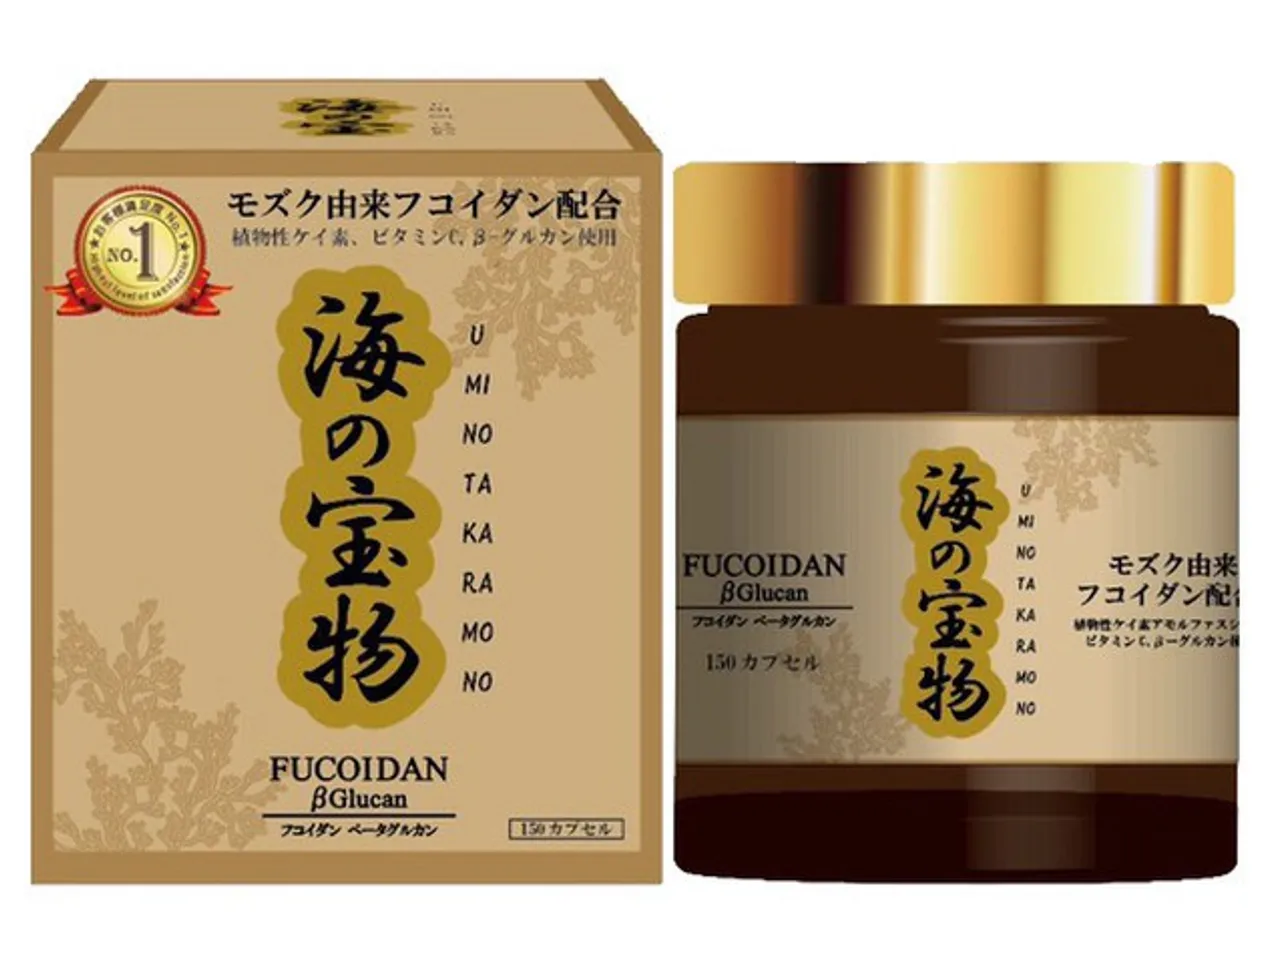 Viên uống Fucoidan Umi no Takaramono Nhật Bản